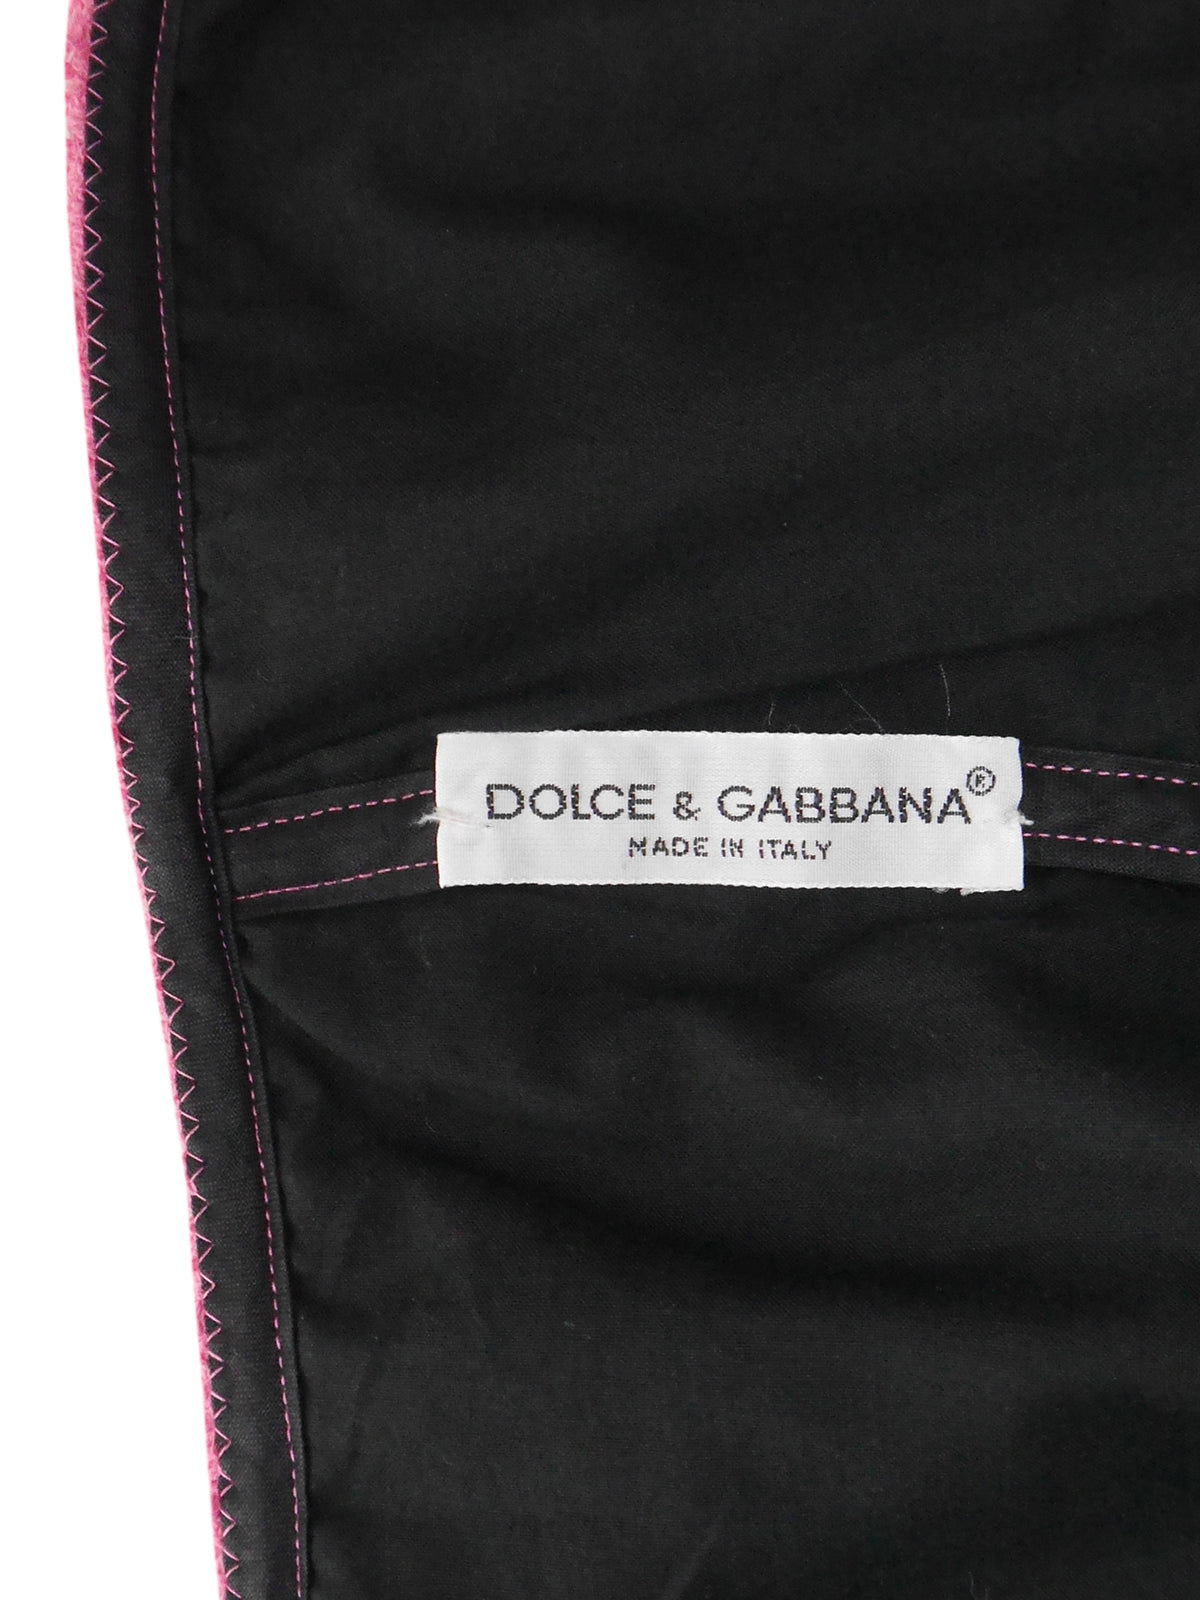 DOLCE & GABBANA Spring 1992 Vintage Pink Terry Cloth Bustier Mini Dress